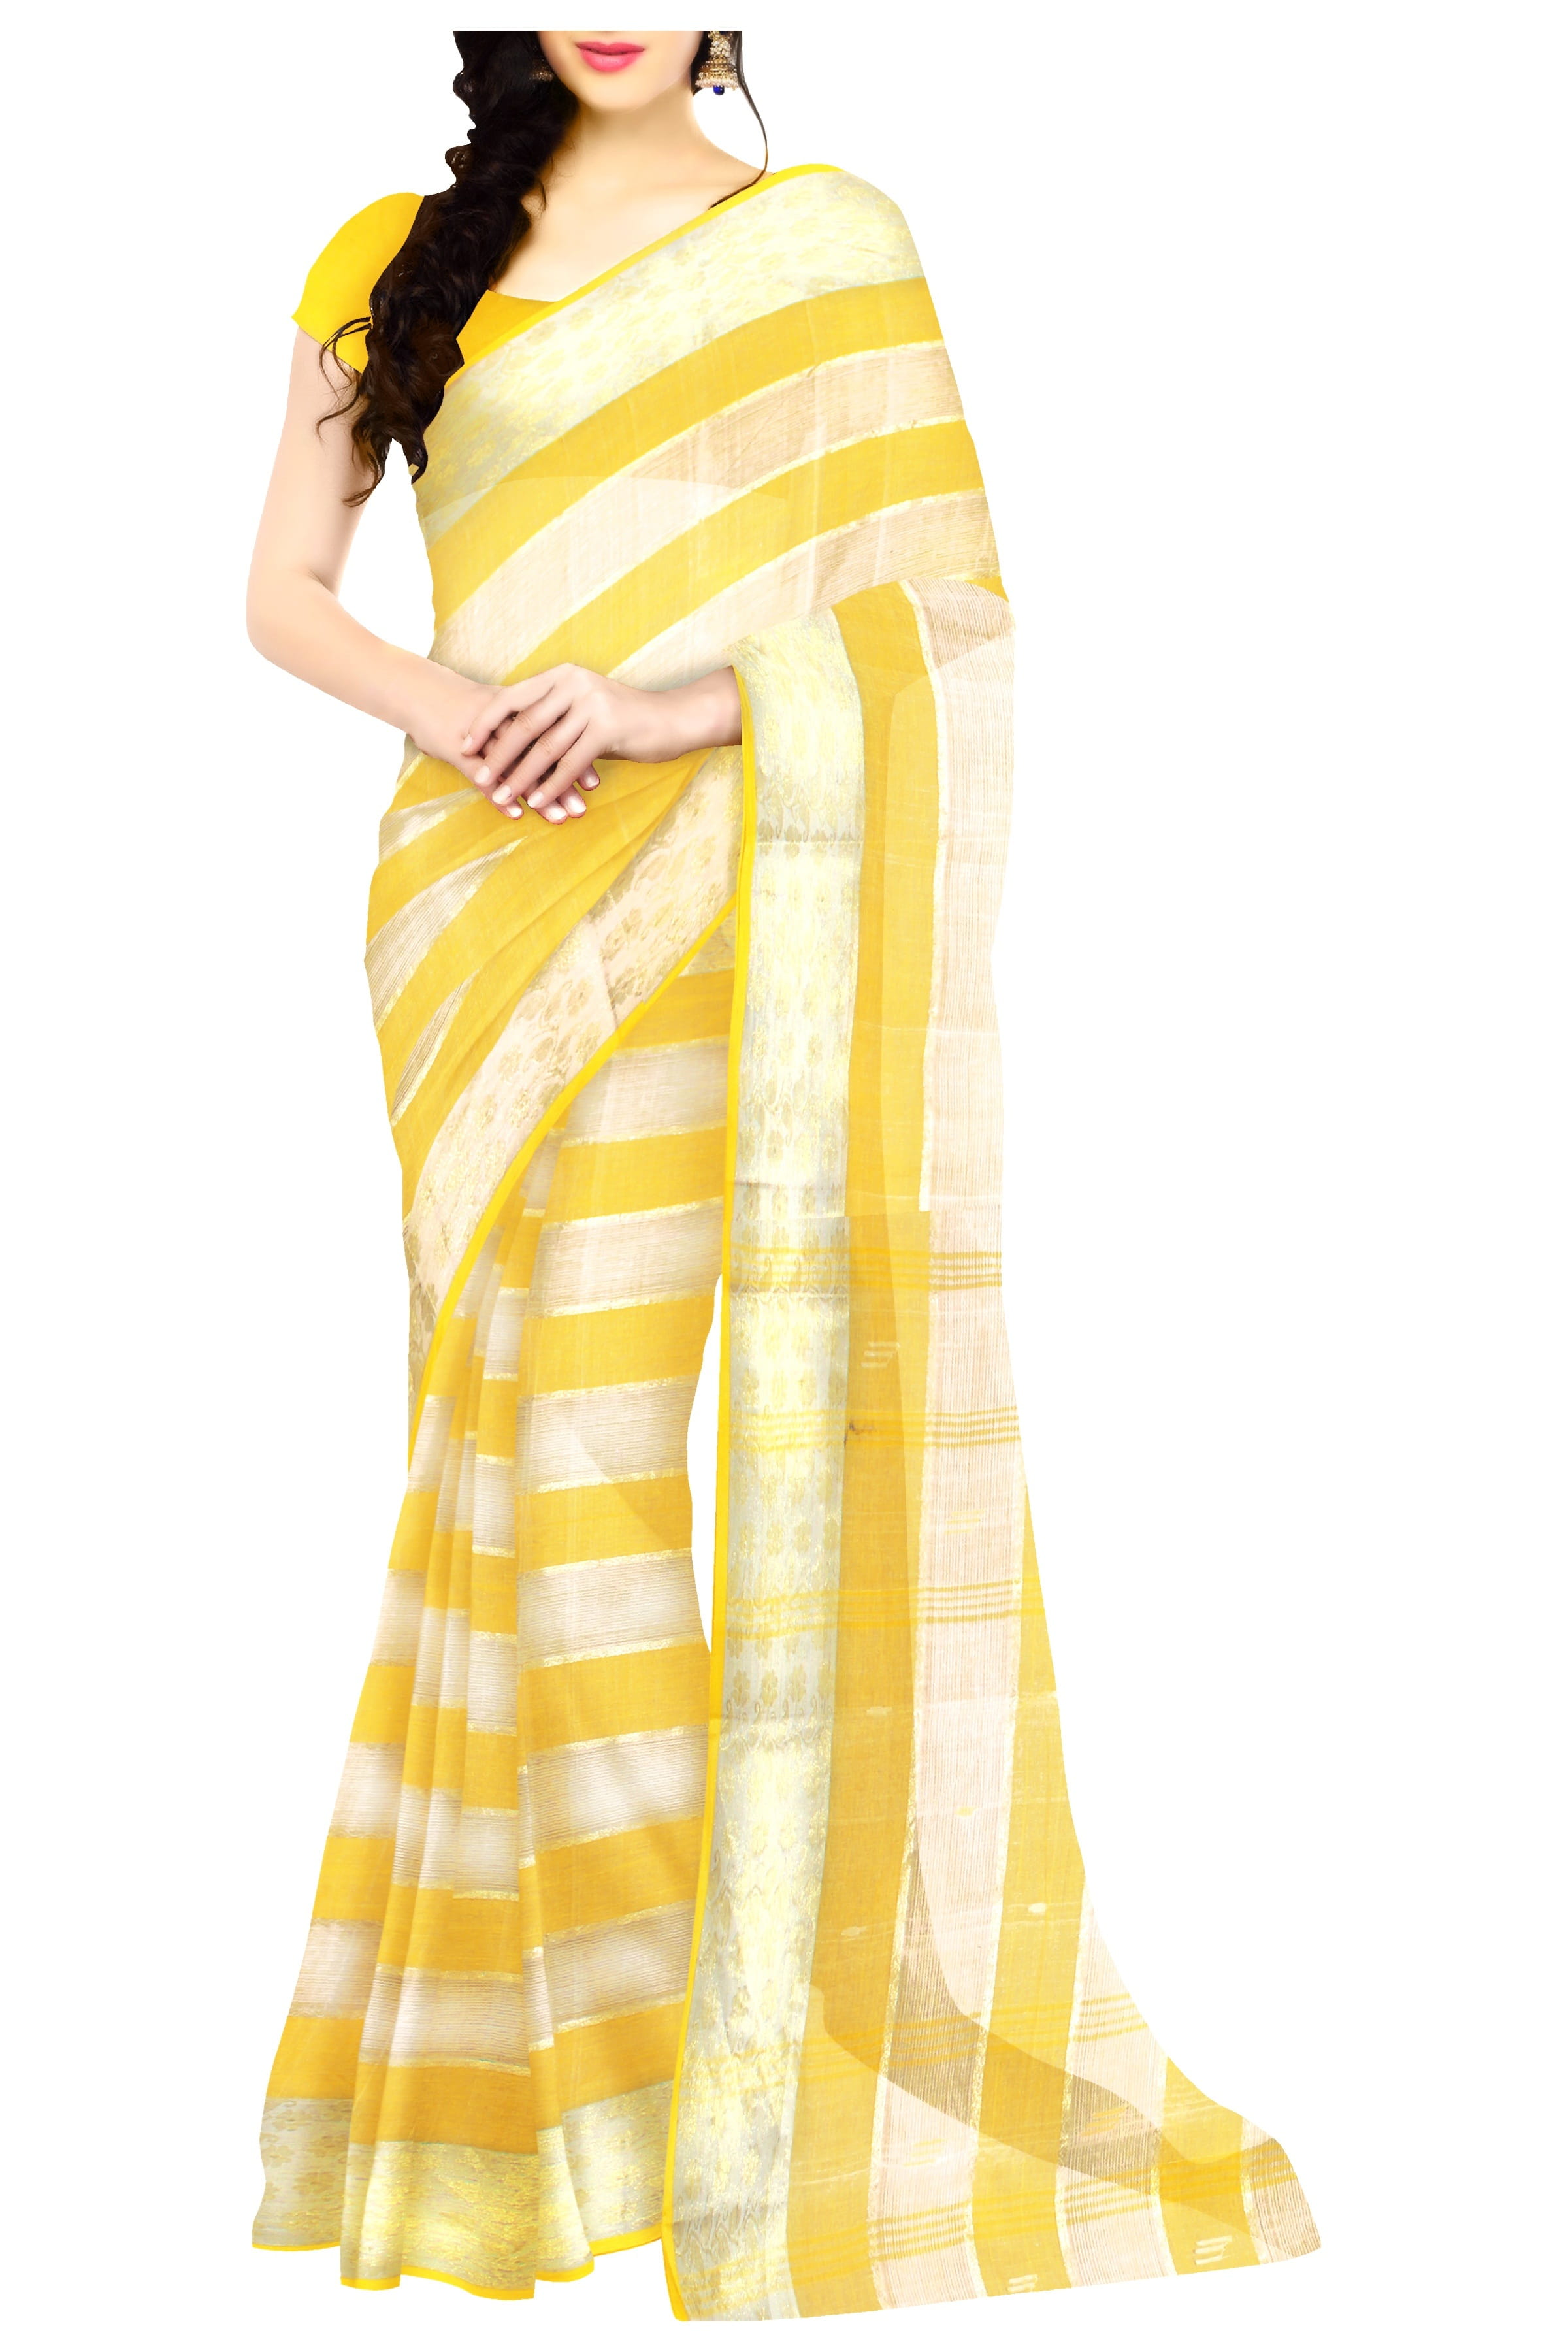 Saree, Indian, Ethnic, Clothing, Fashion, silk, dress, woman